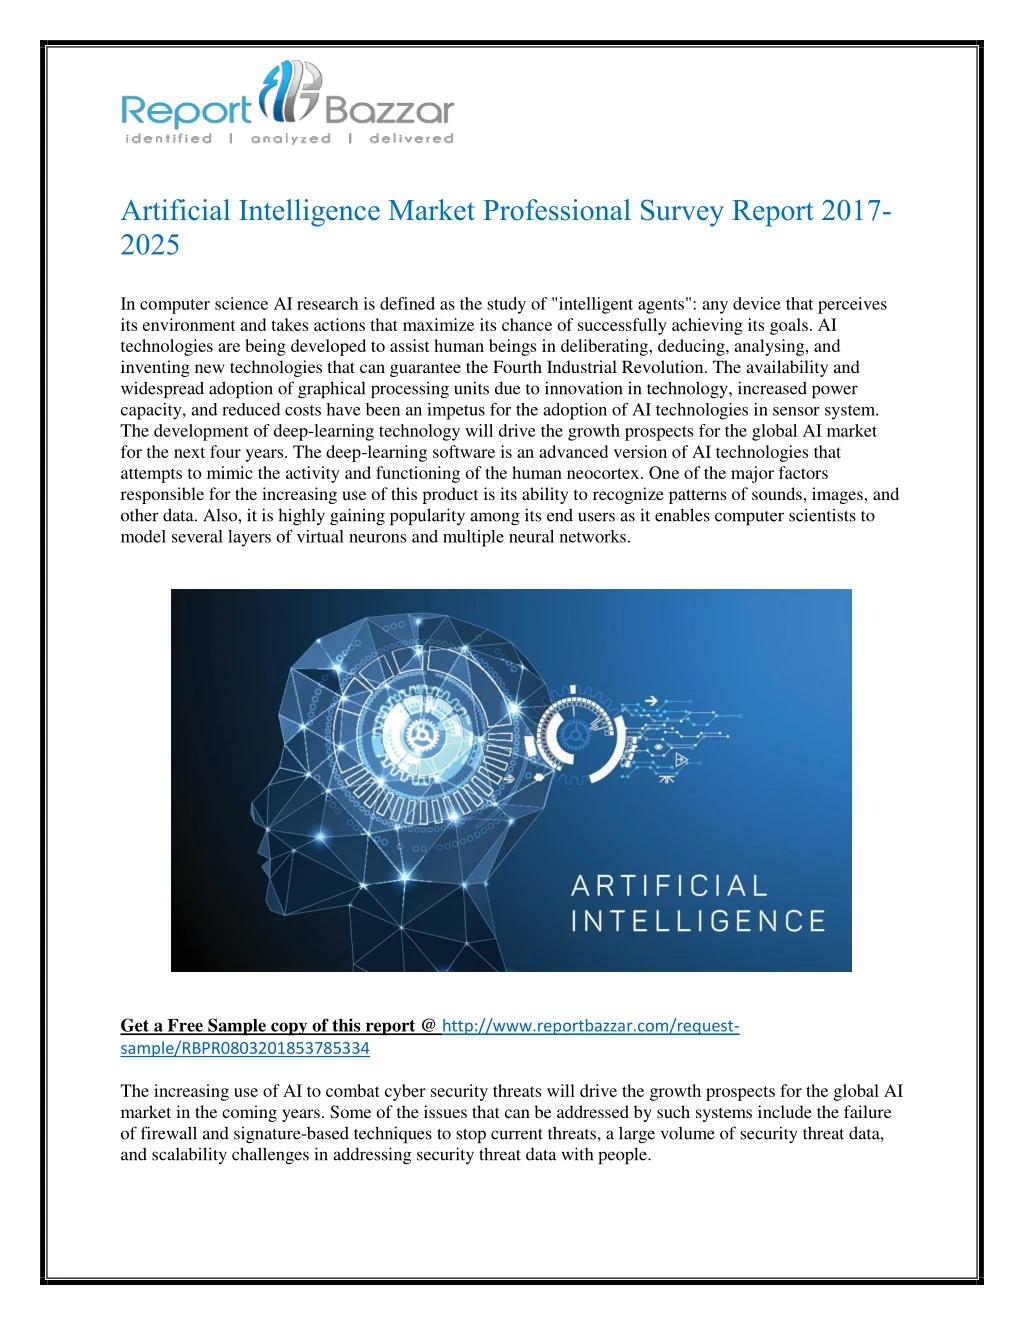 artificial intelligence market professional